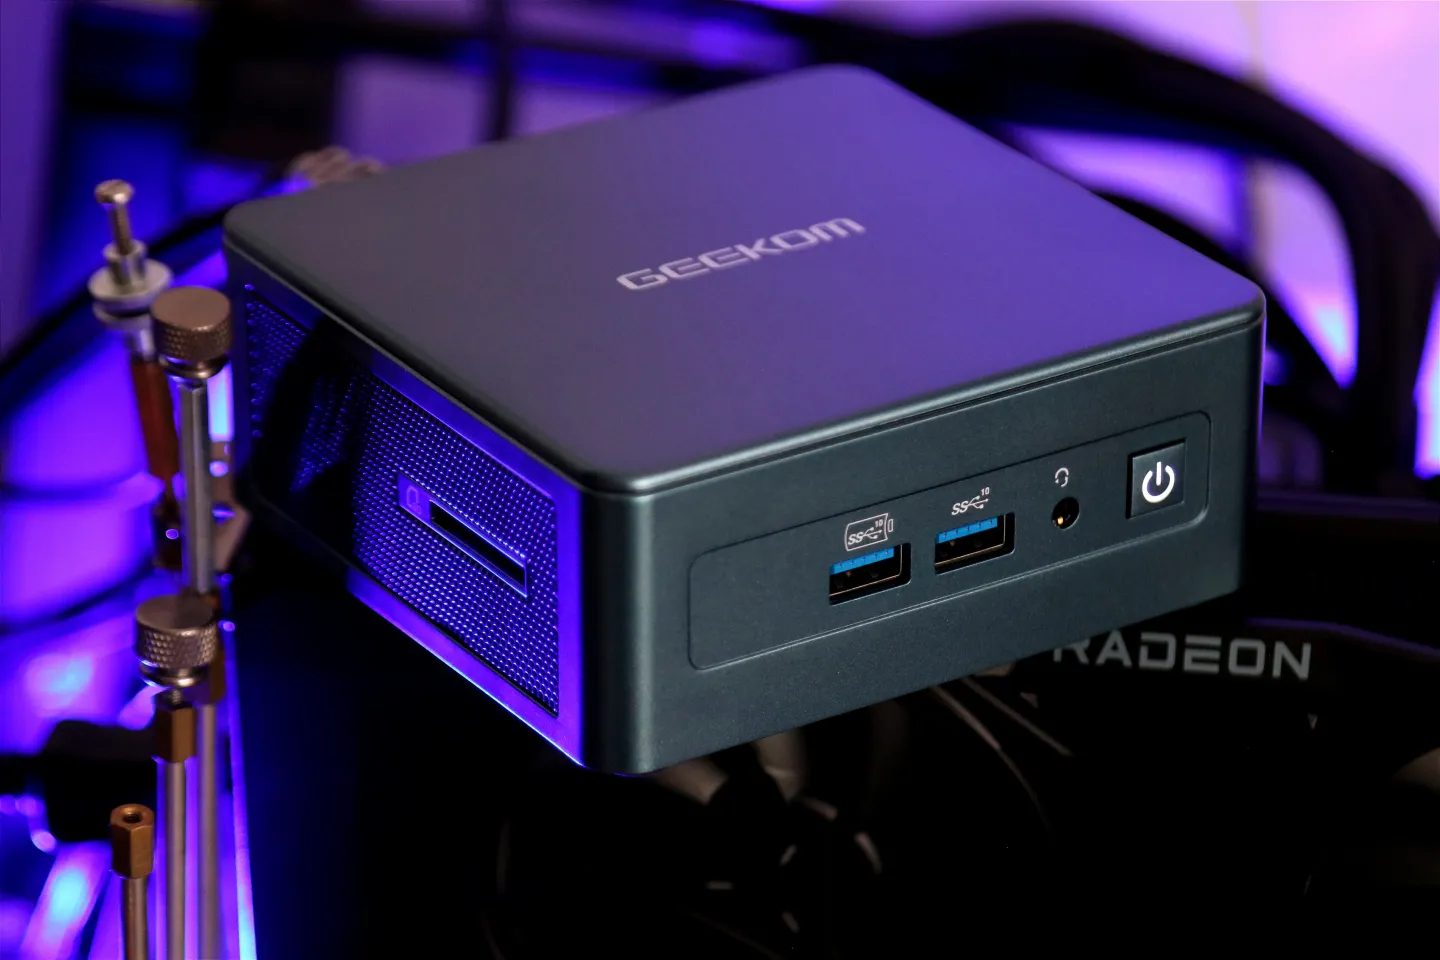 Geekom Mini IT13 Mini PC (Core i9 13900H) review